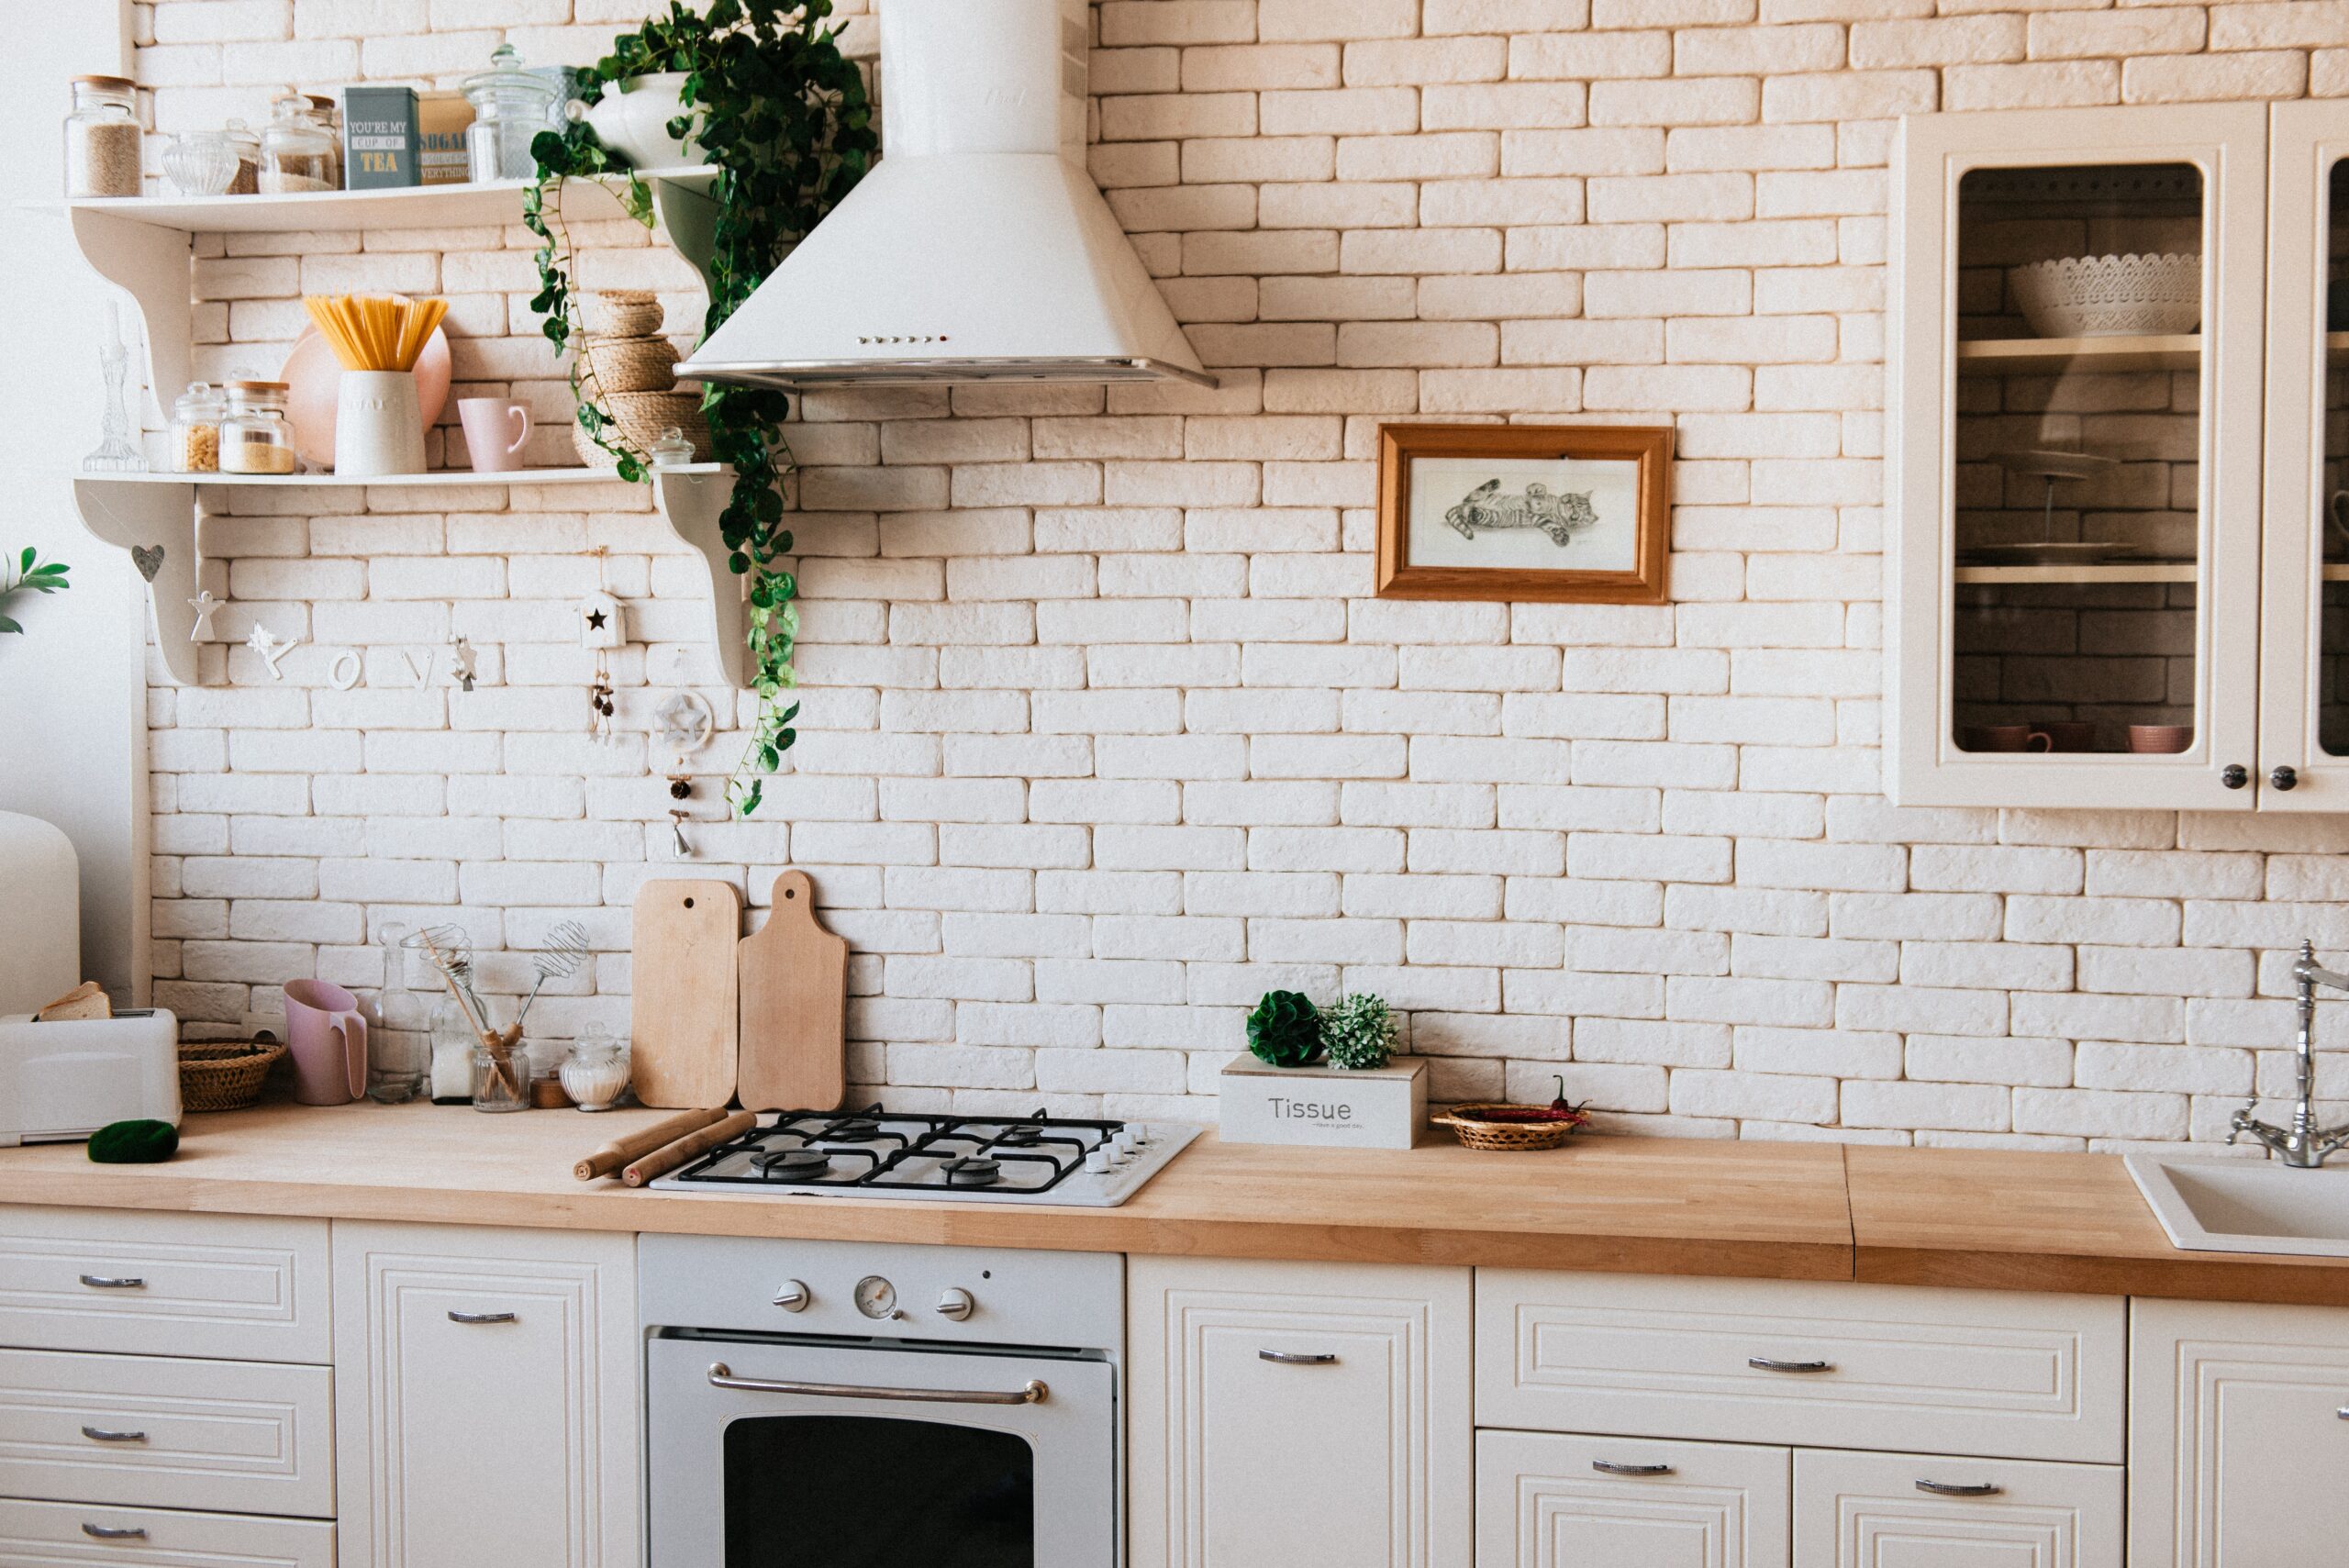 Rustic, cozy balanced kitchen